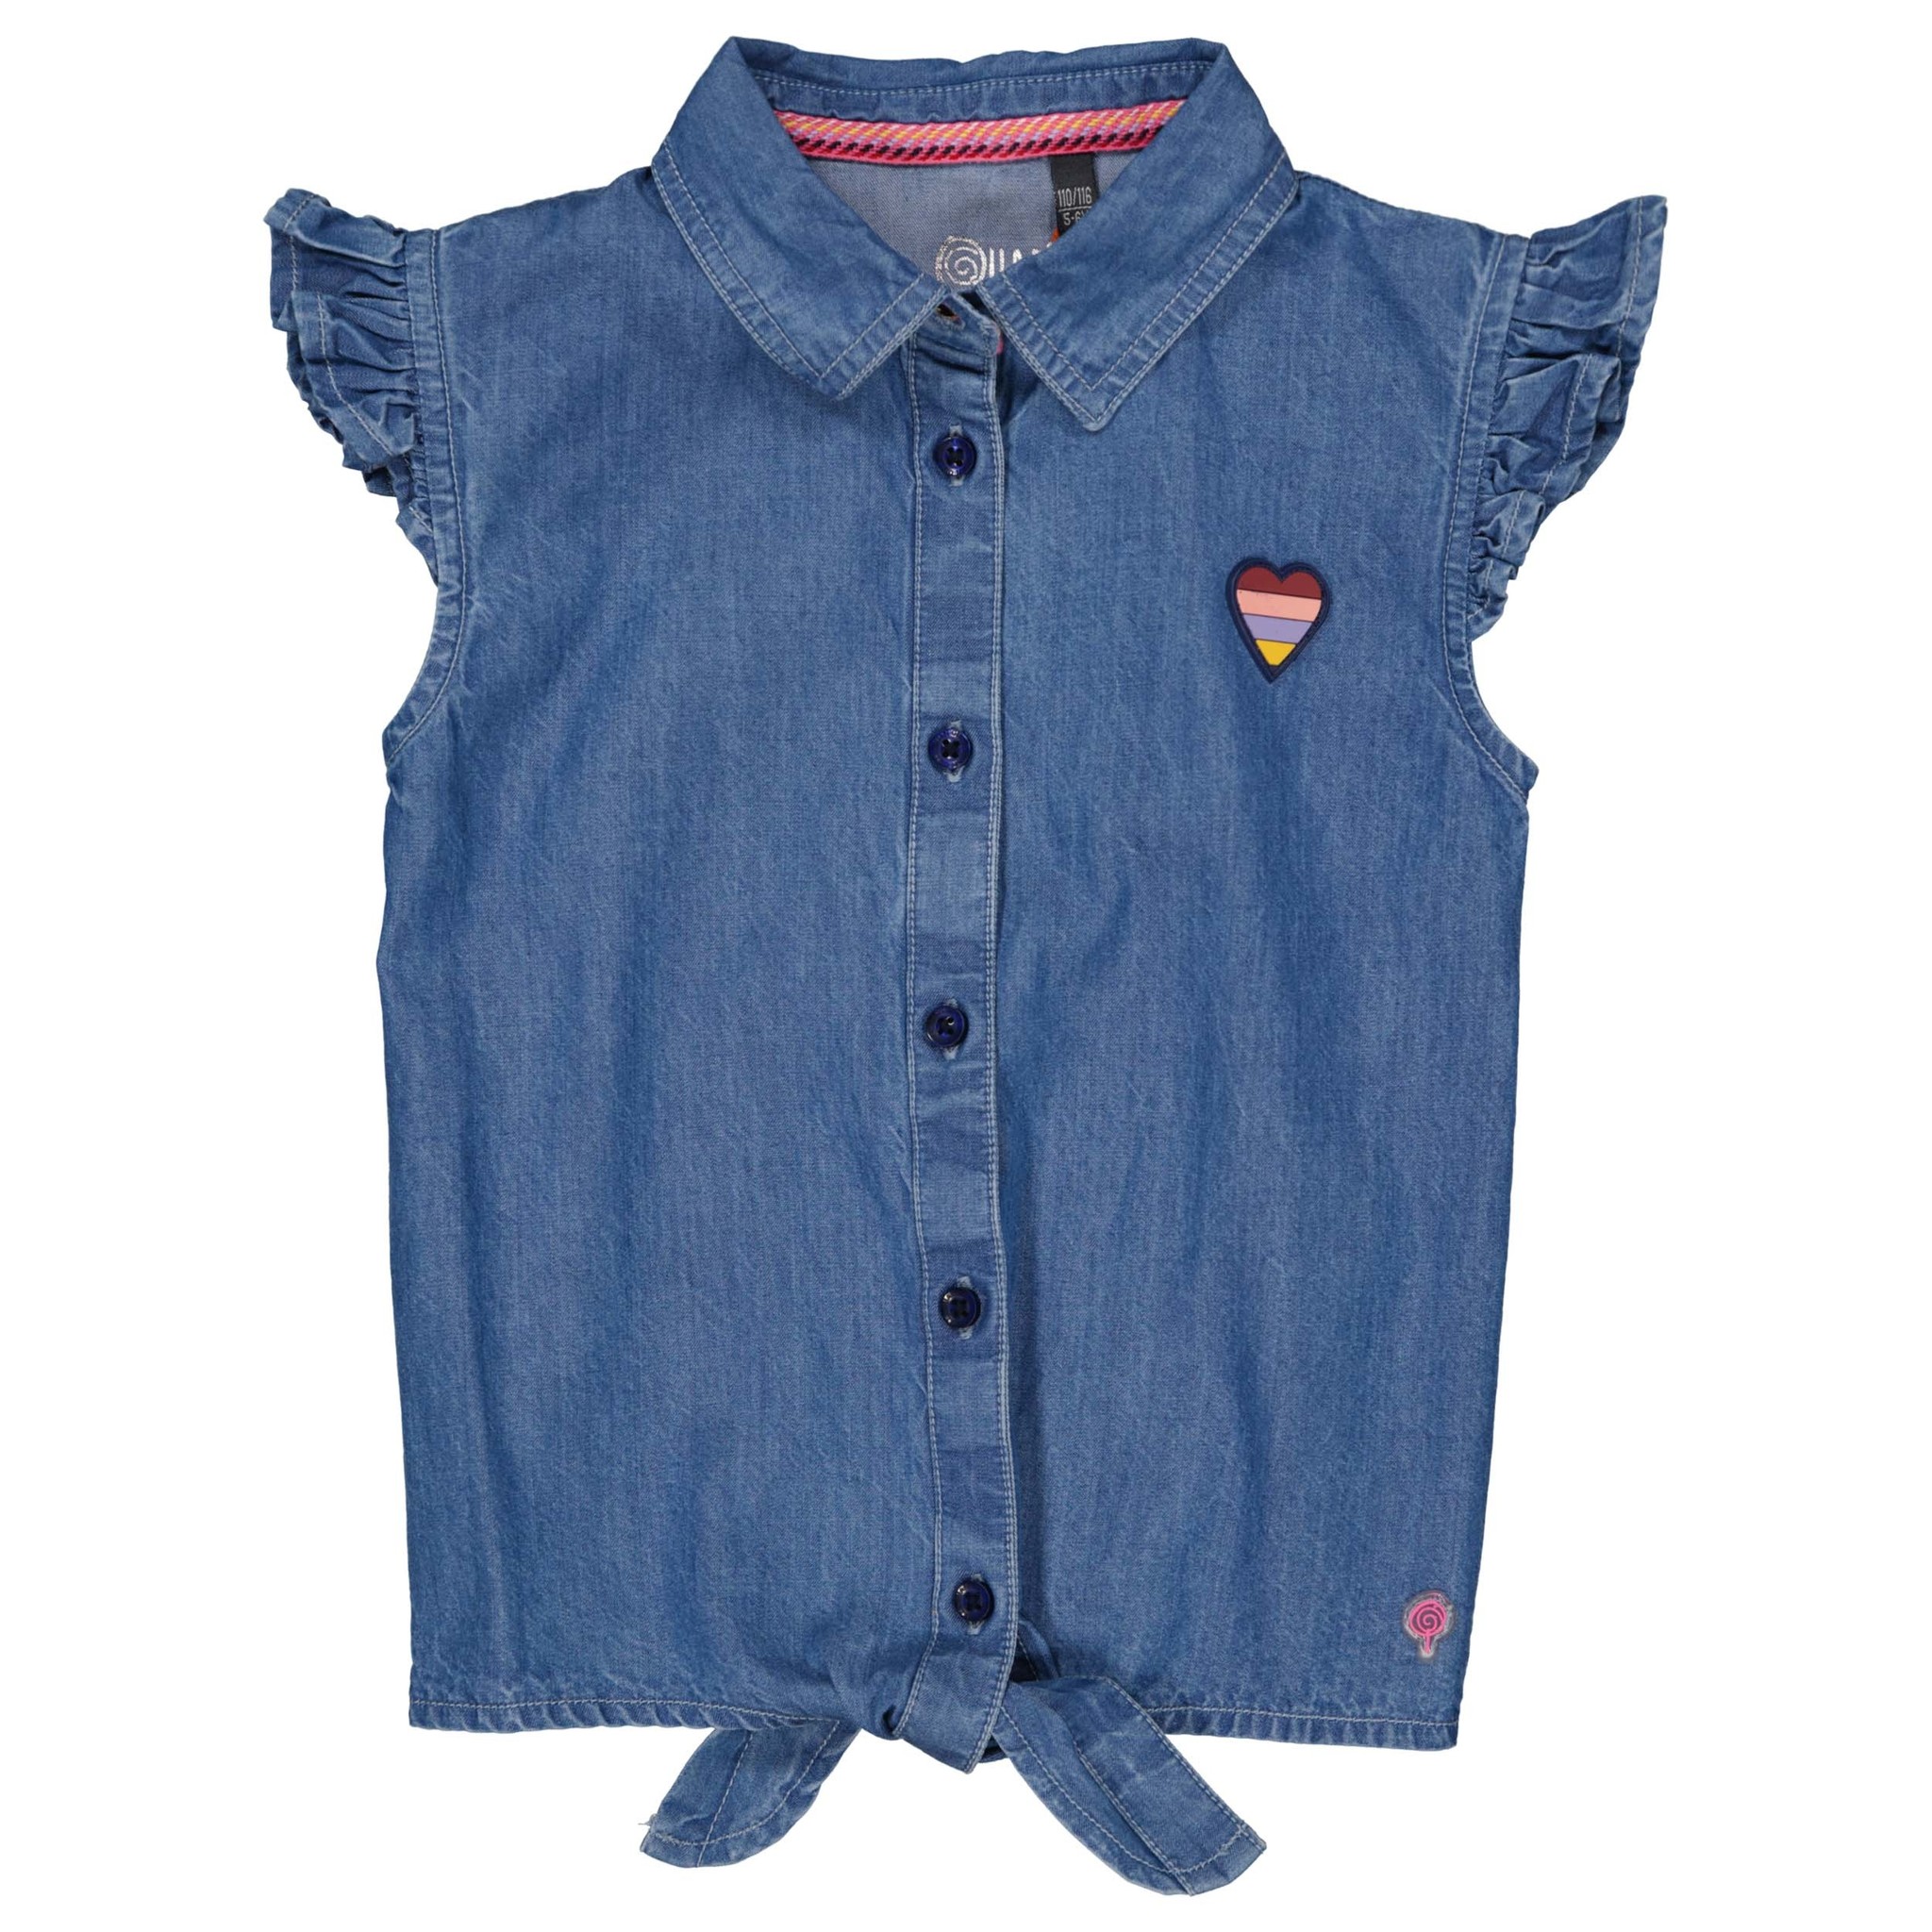 Quapi Meisjes blouse - Mar - Blauw denim